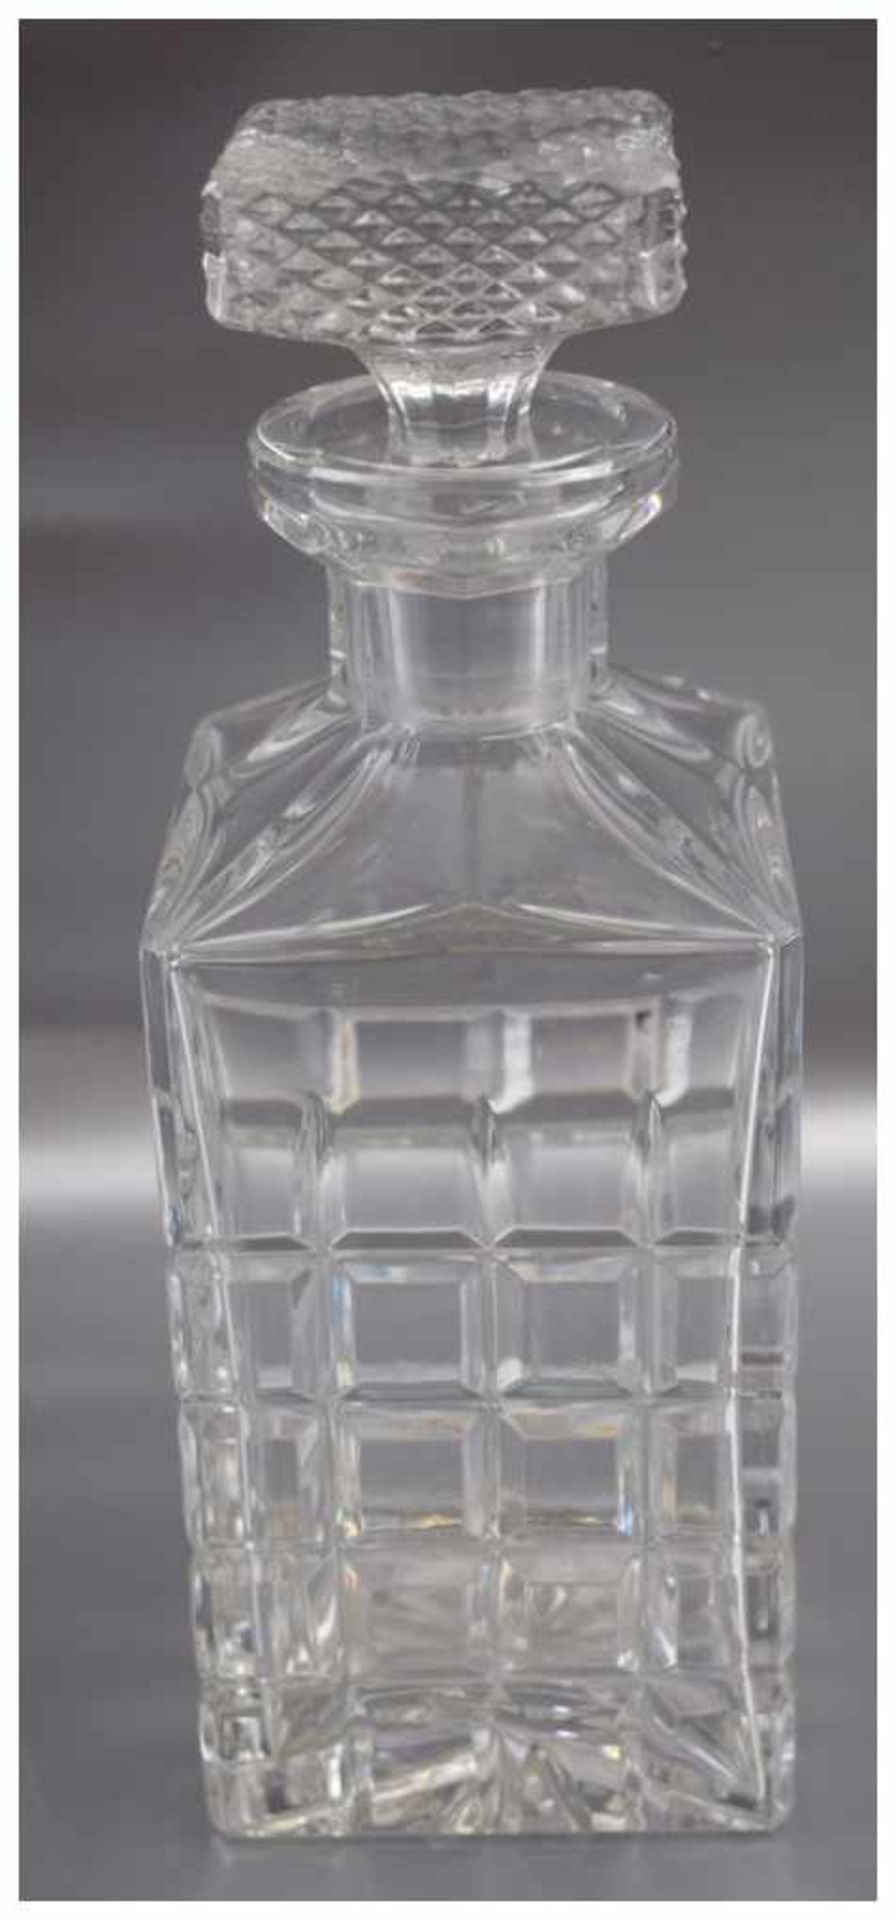 Karaffe farbl. Kristallglas, geschliffen verziert, rechteckig, mit Stöpsel, H 25 cm